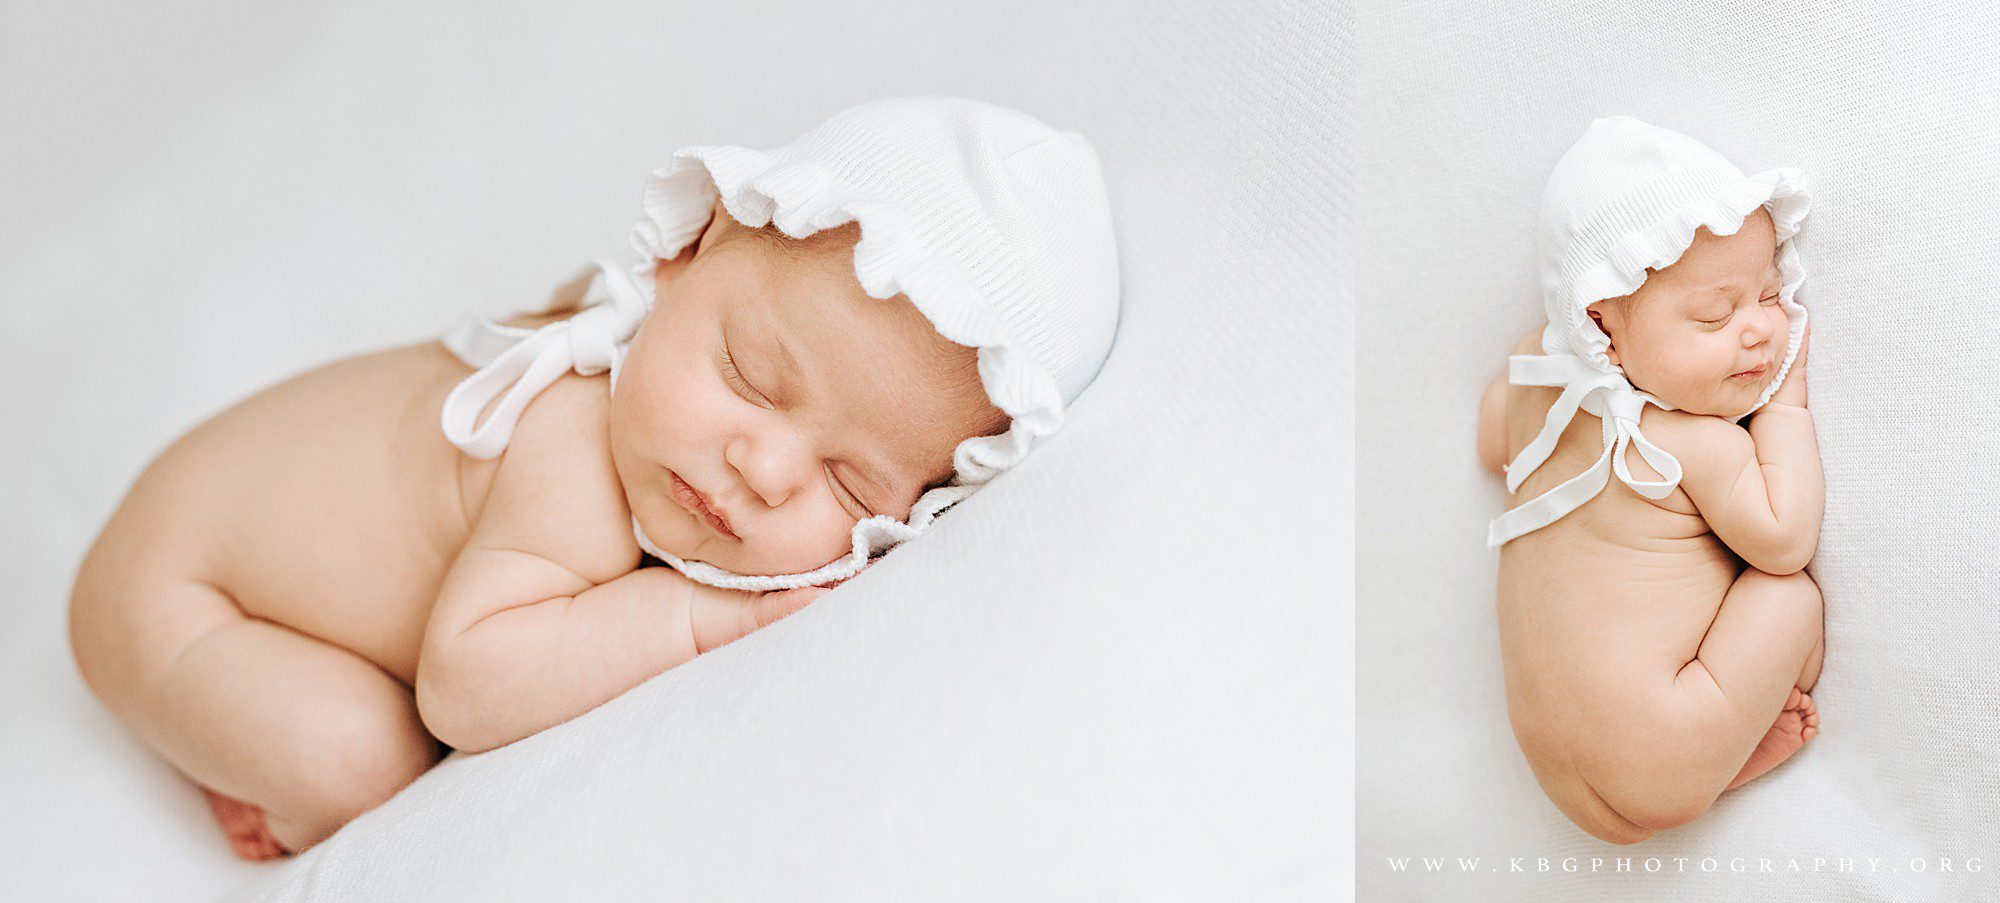 marietta newborn session - baby girl in white bonnet